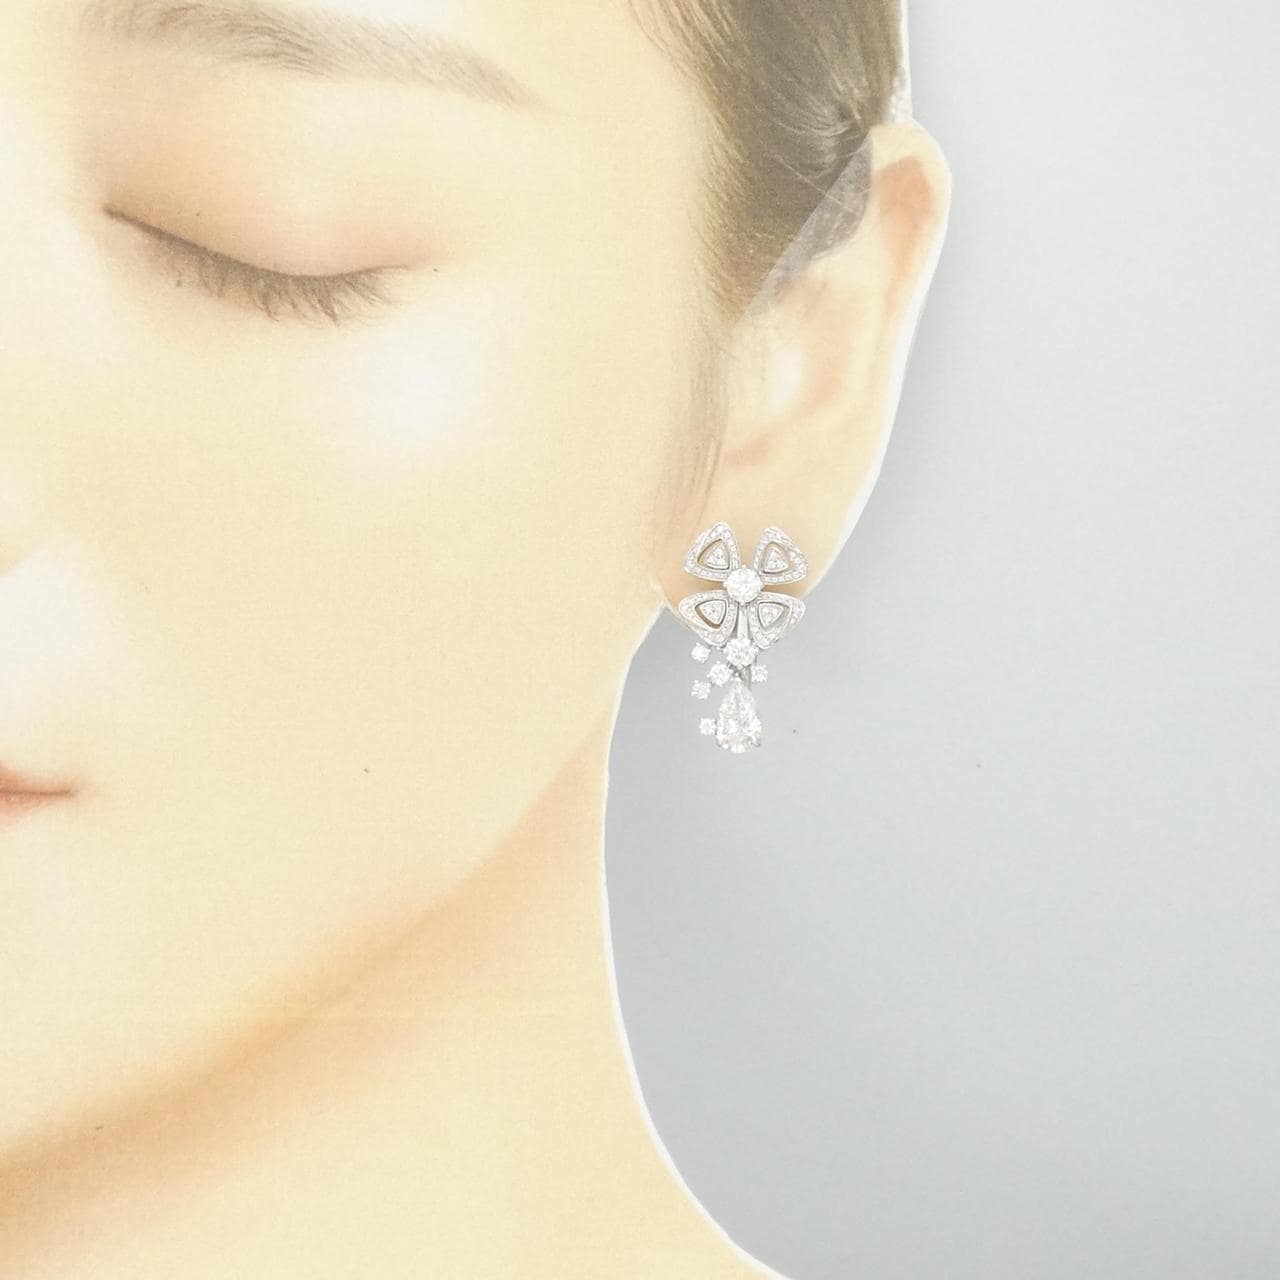 BVLGARI Diamond Earrings 1.01CT 1.01CT DE VVS1-2 Pear Shape